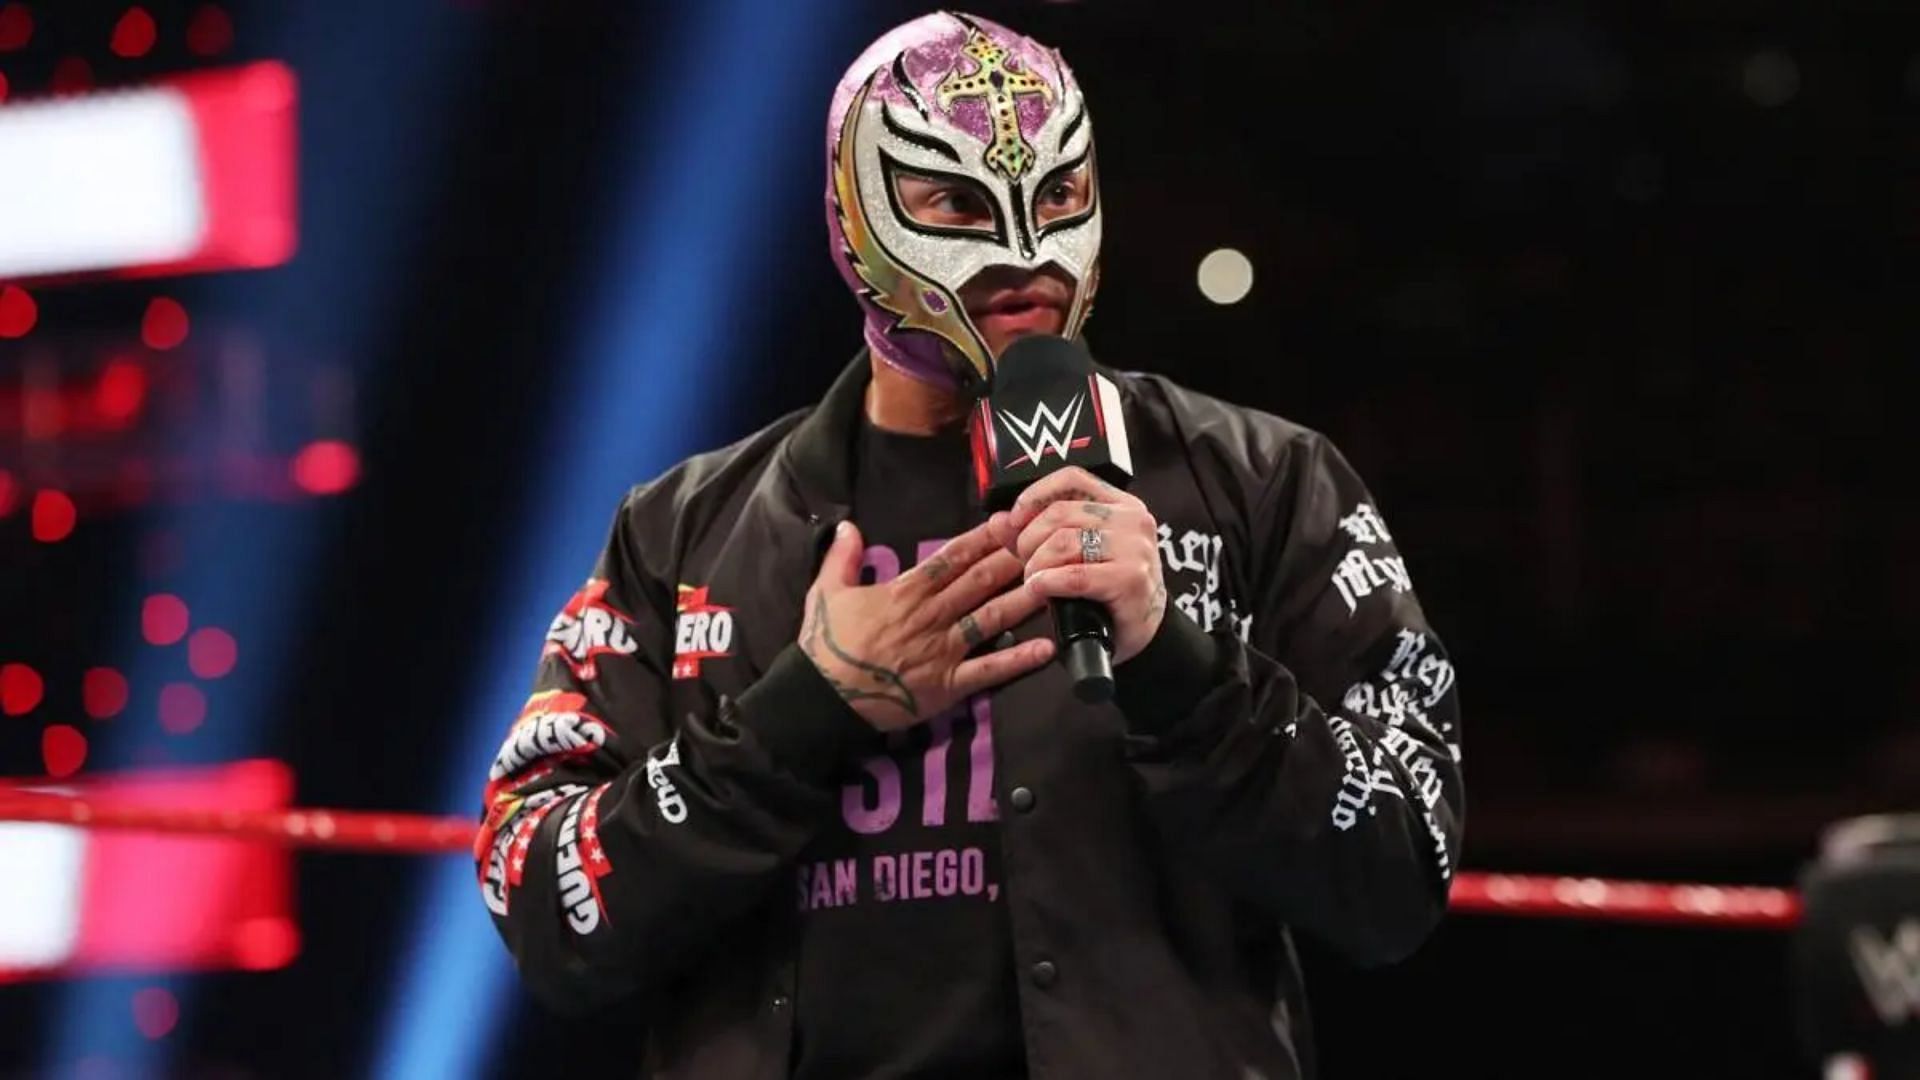 Legendary WWE Superstar Rey Mysterio